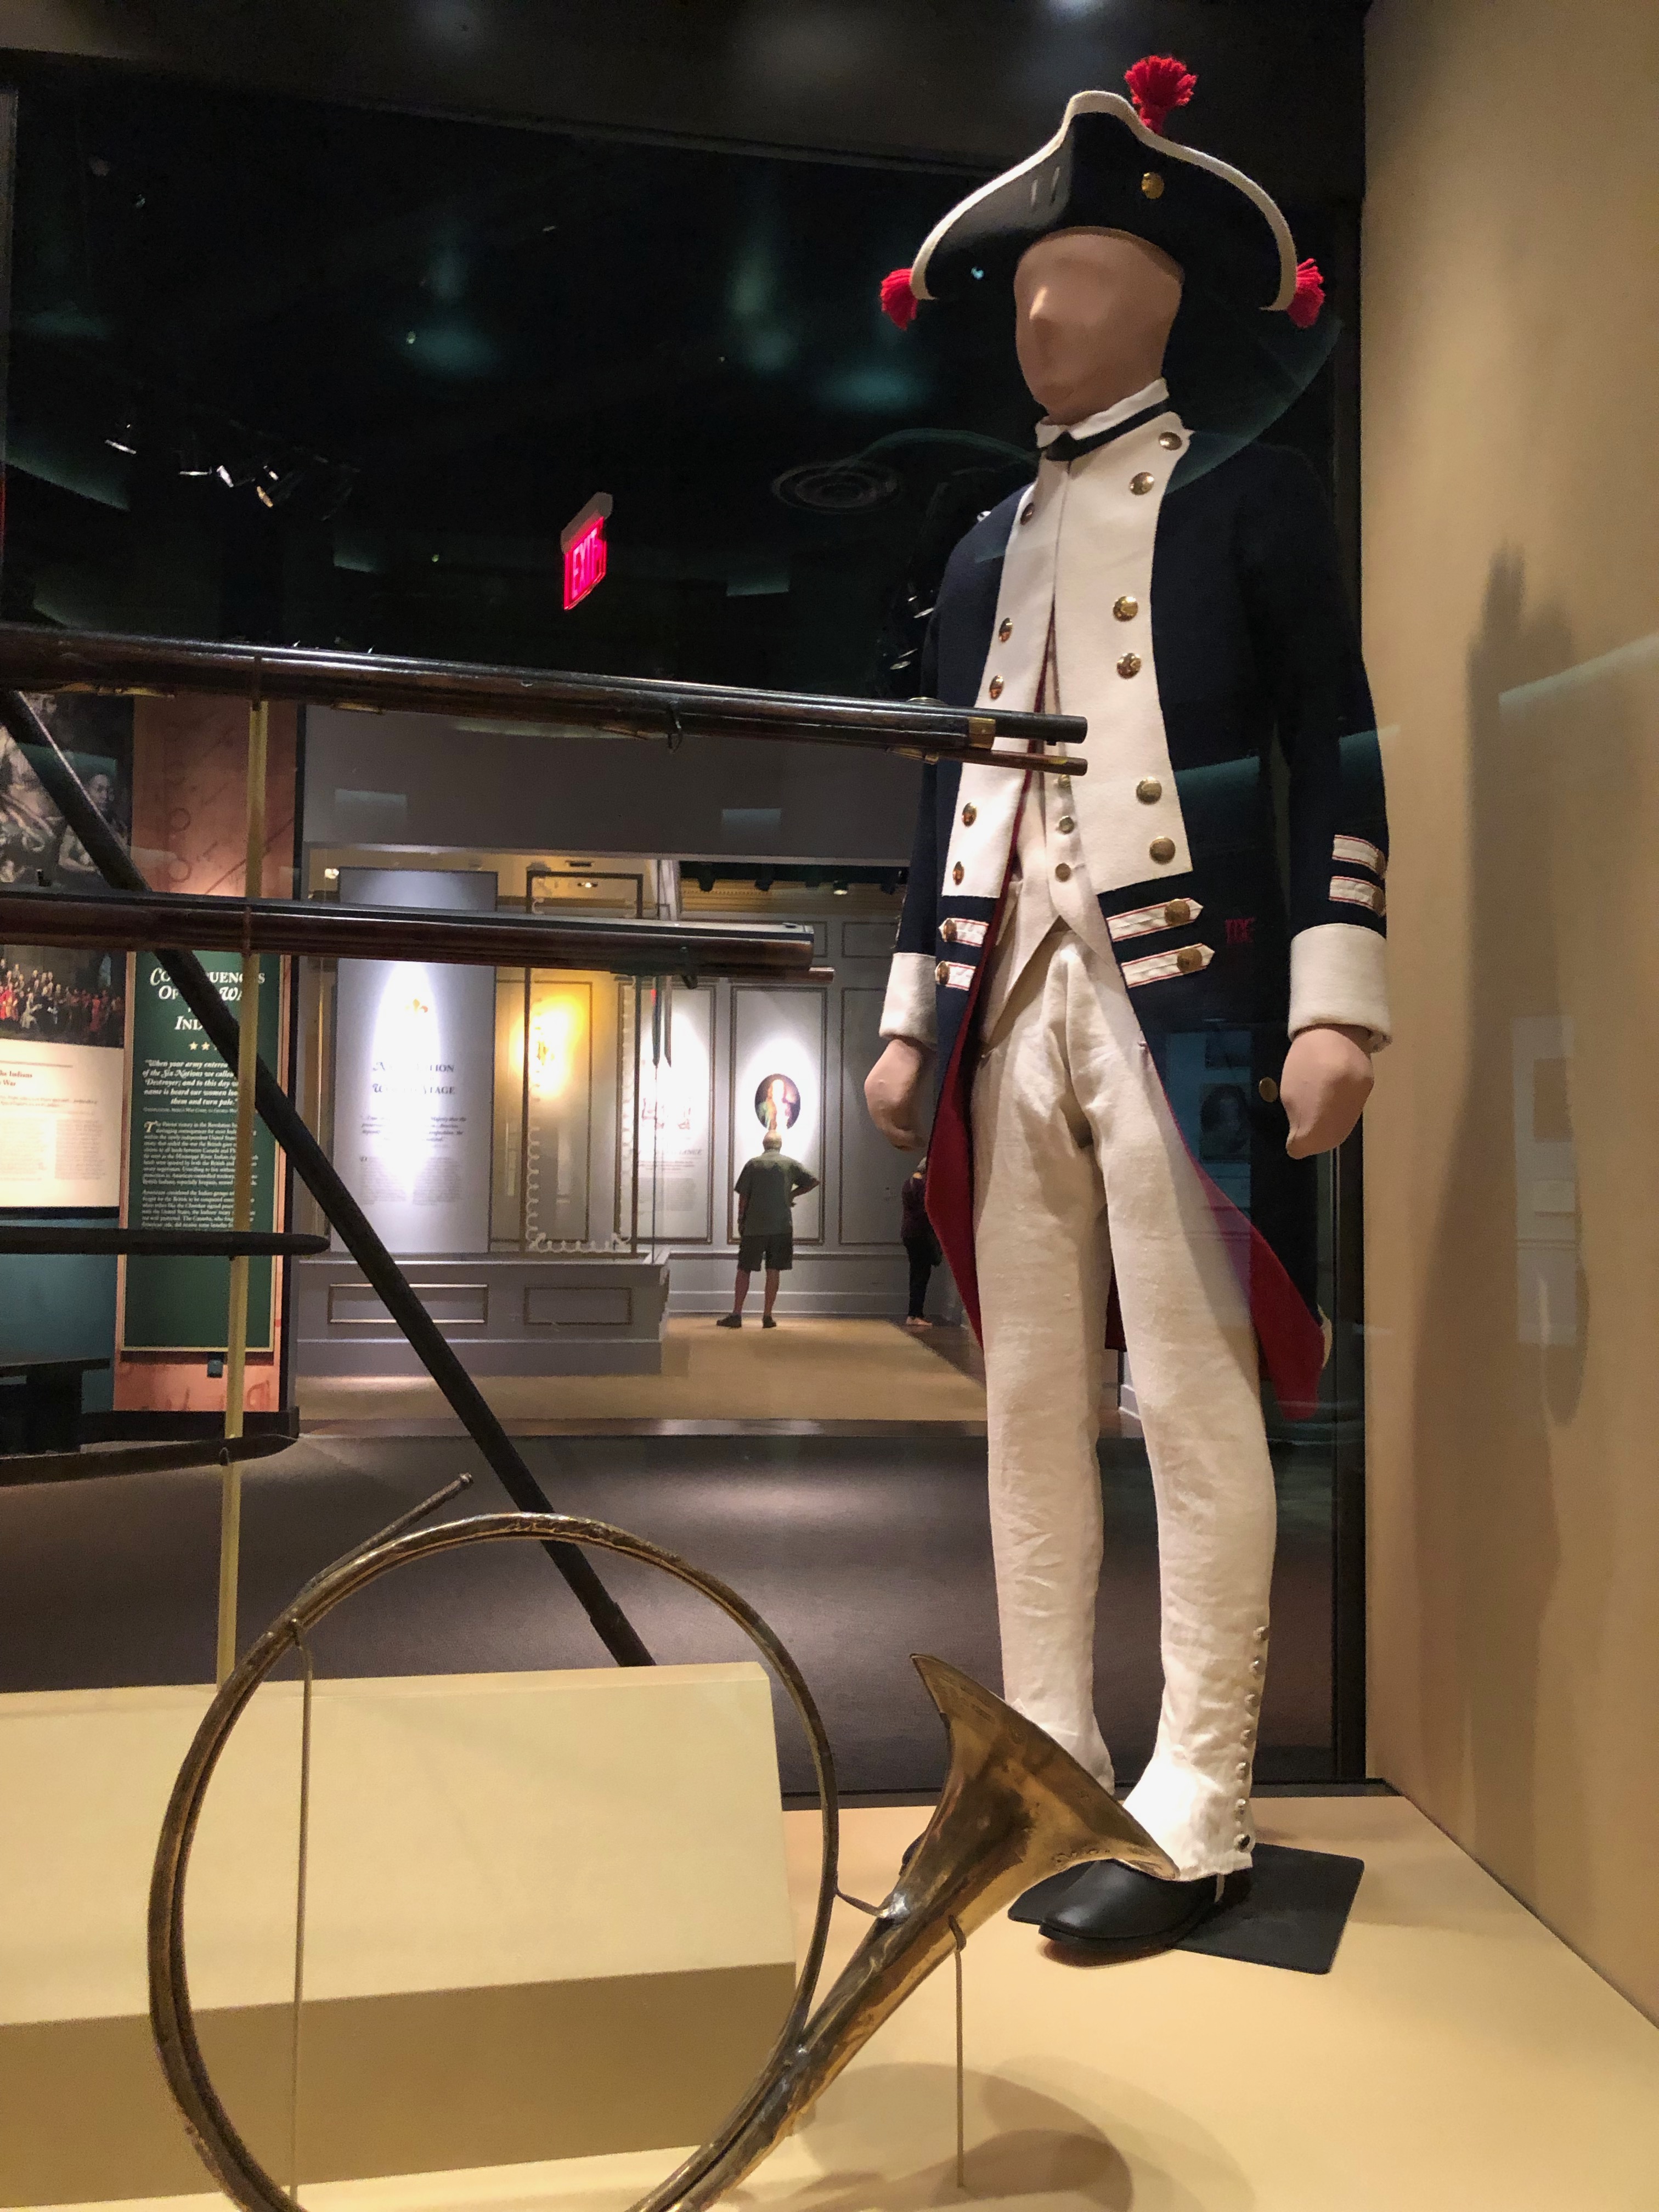 Destination:  American Revolution Museum and The Forgotten Soldier – Jan. 4, 2020